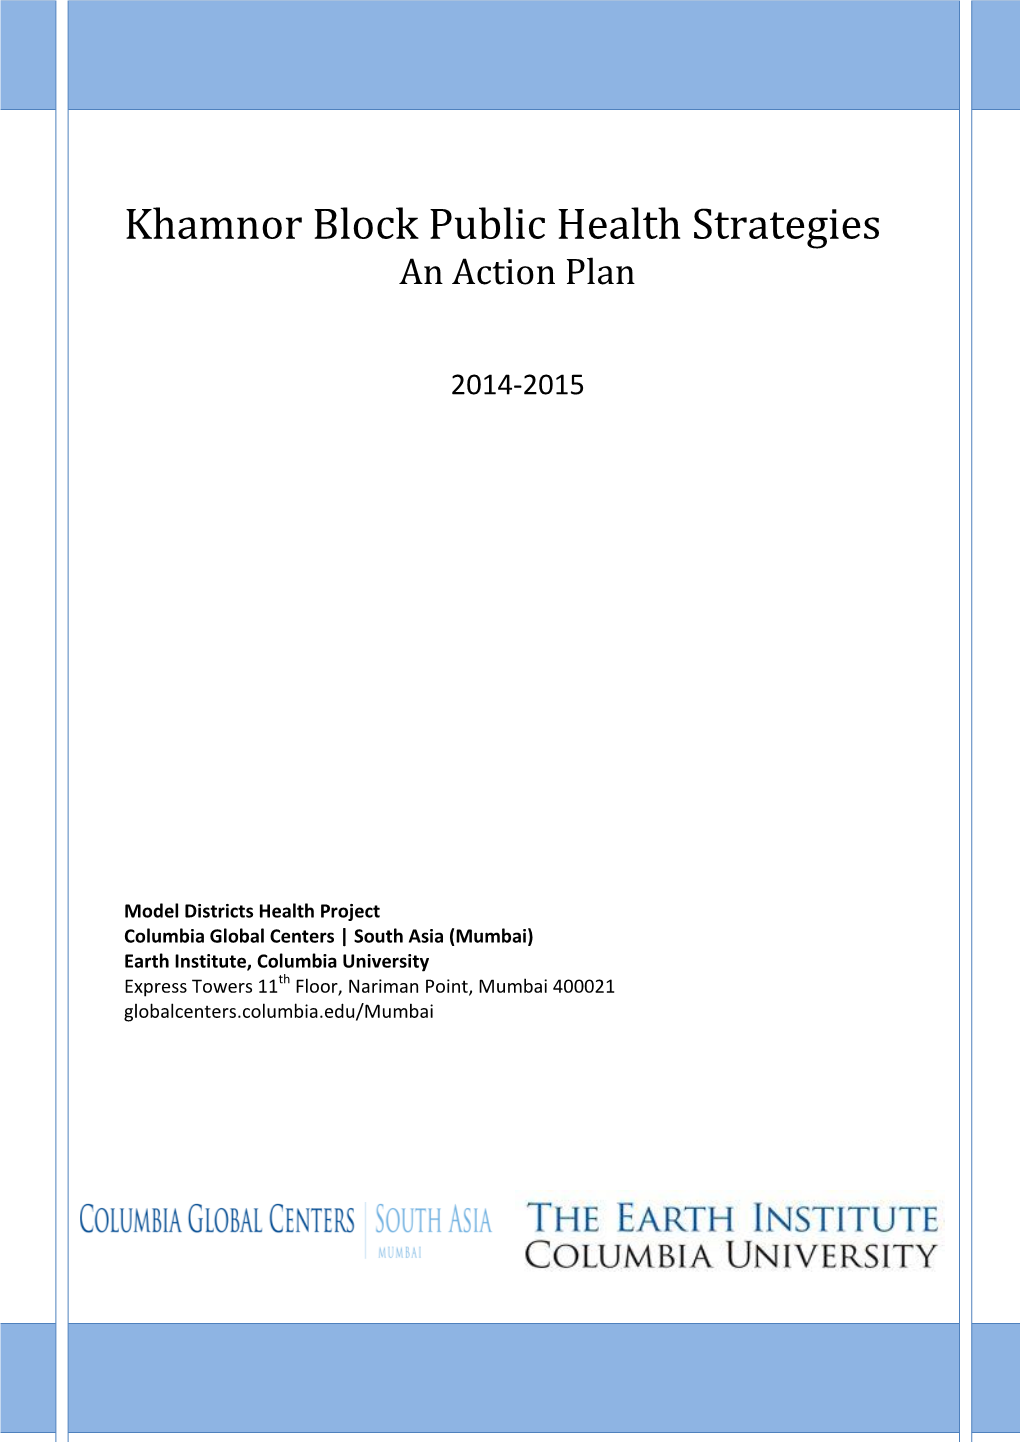 Khamnor Block Public Health Strategies an Action Plan